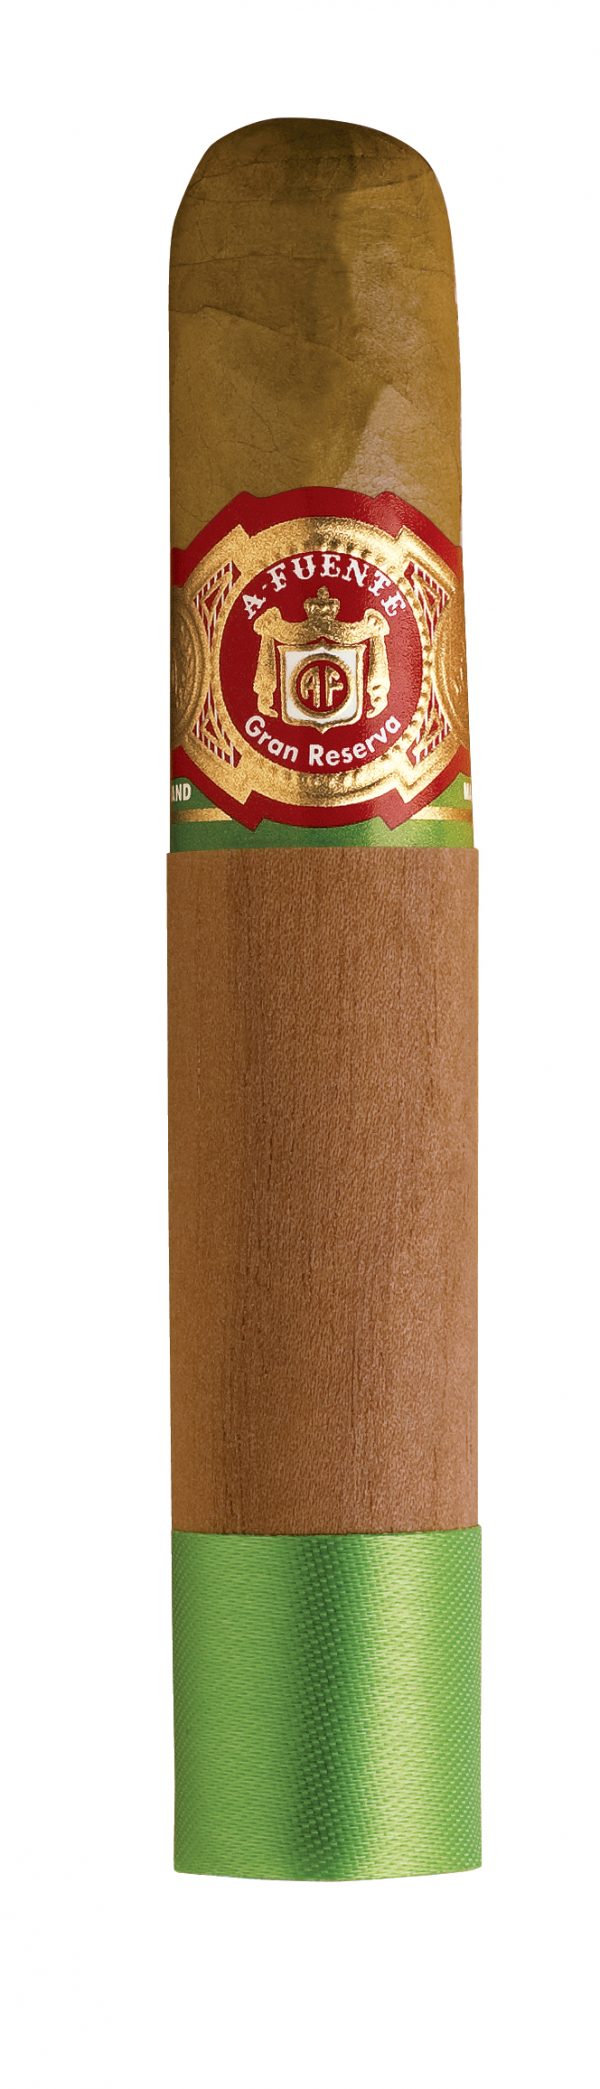 single arturo fuente chateau natural cigar